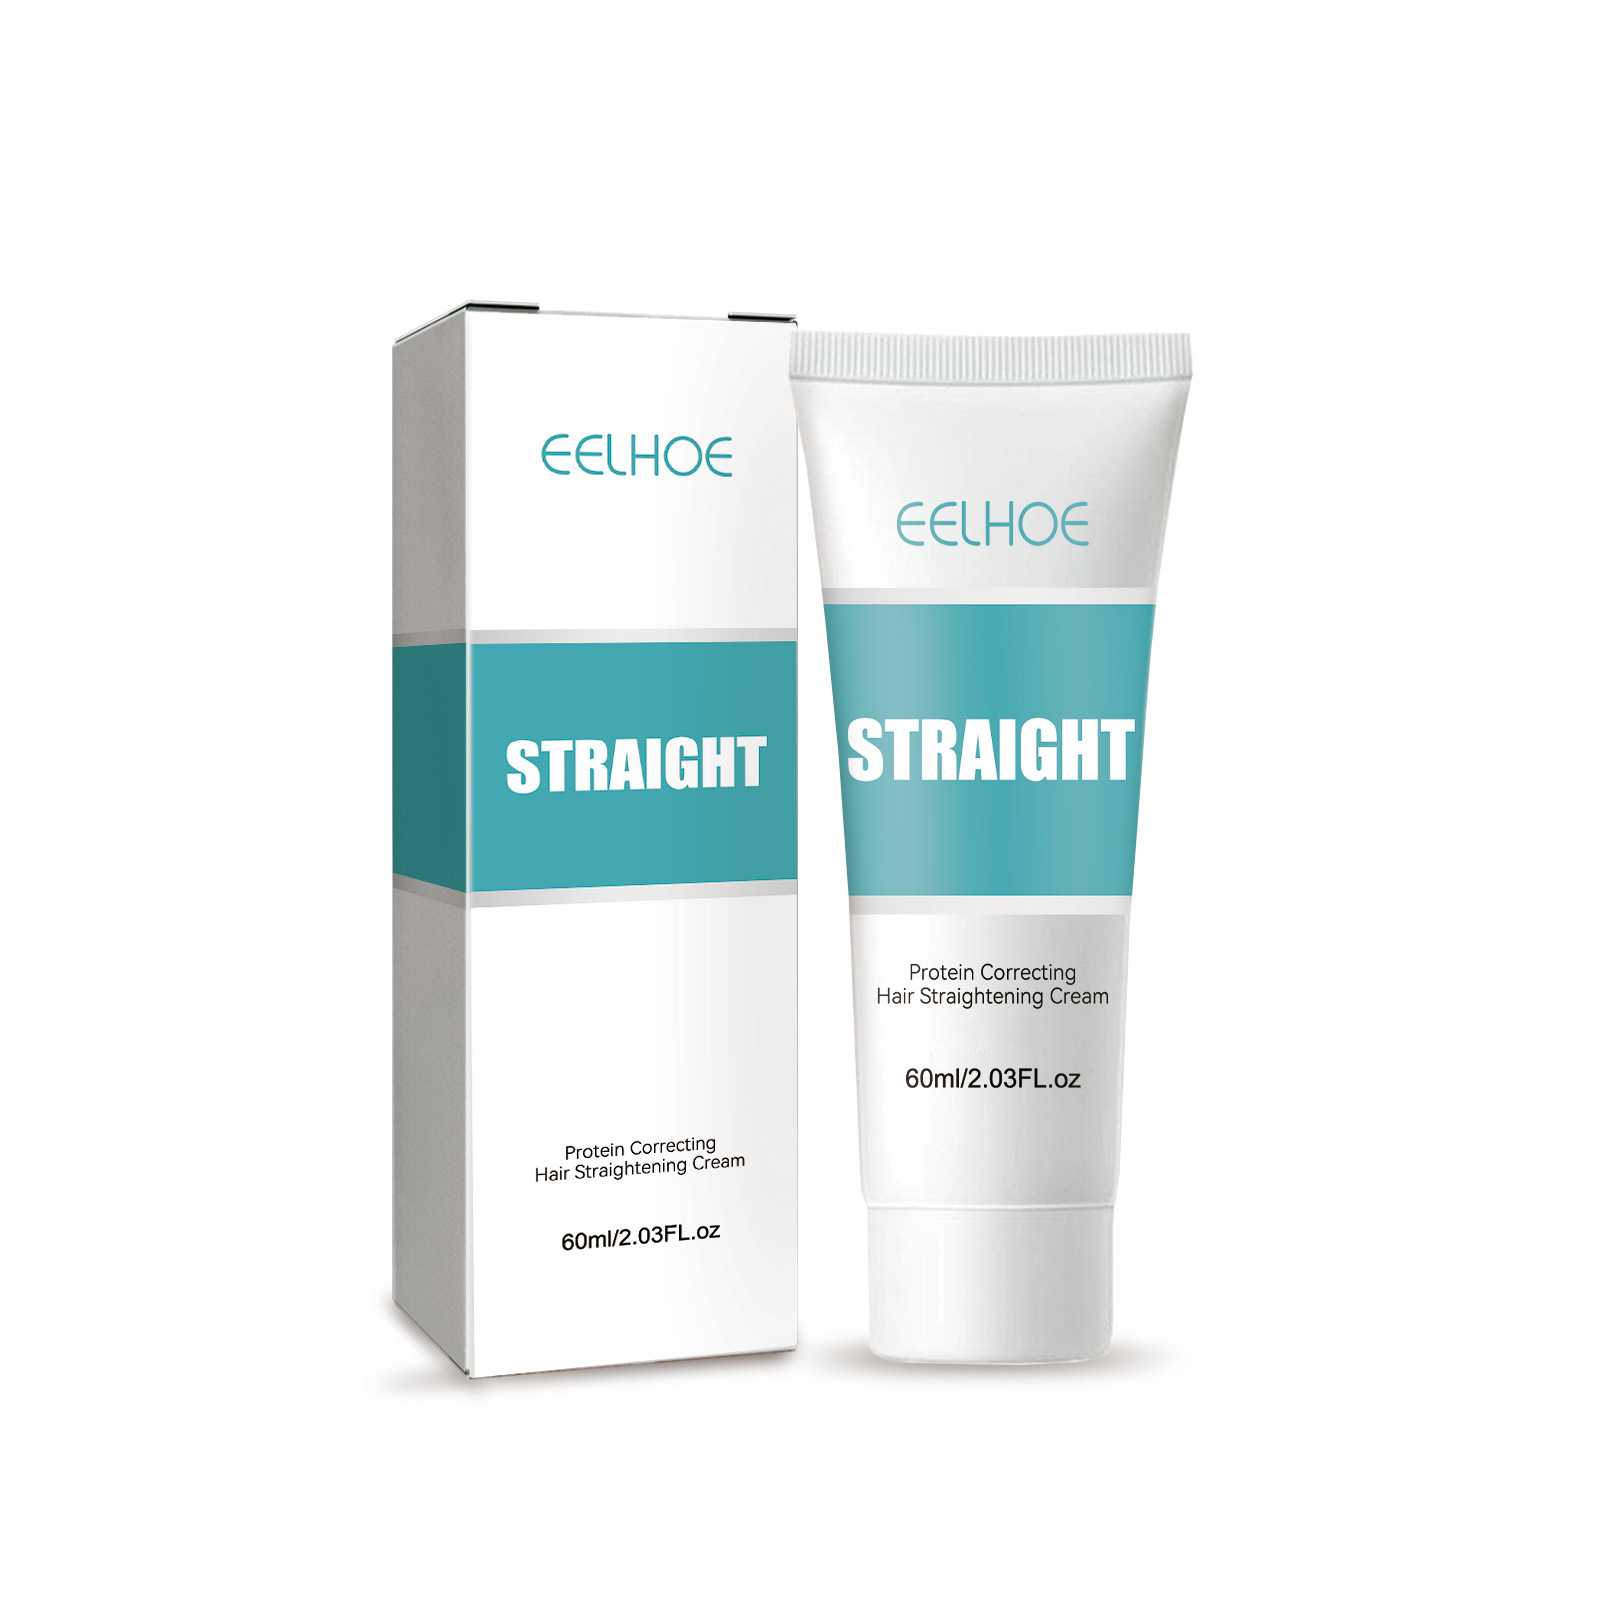 🔥NEW YEAR 2023 SALE 30% OFF🔥Silk & Gloss Hair Straightening Cream